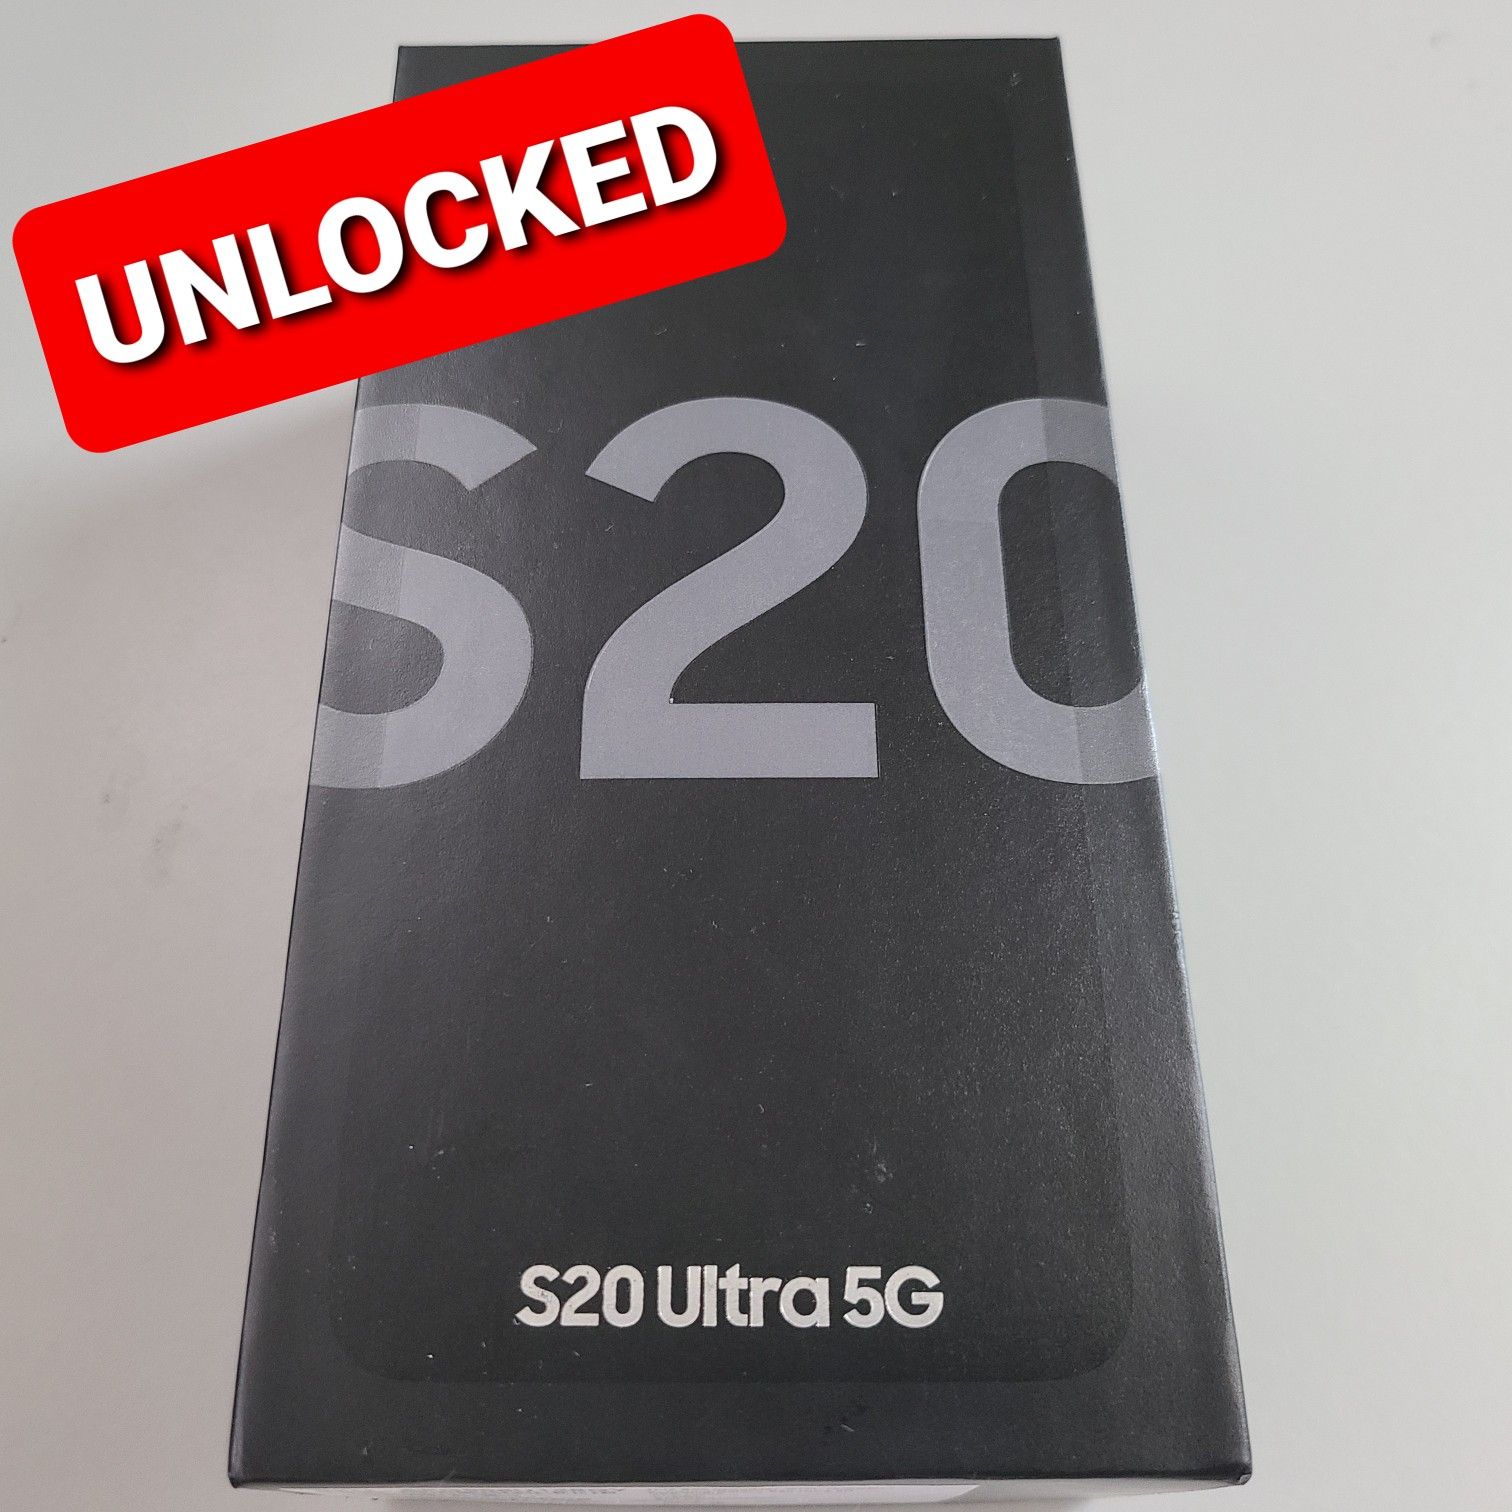 Samsung Galaxy S20 Ultra 5G Cosmic Gray 128GB (Unlocked)